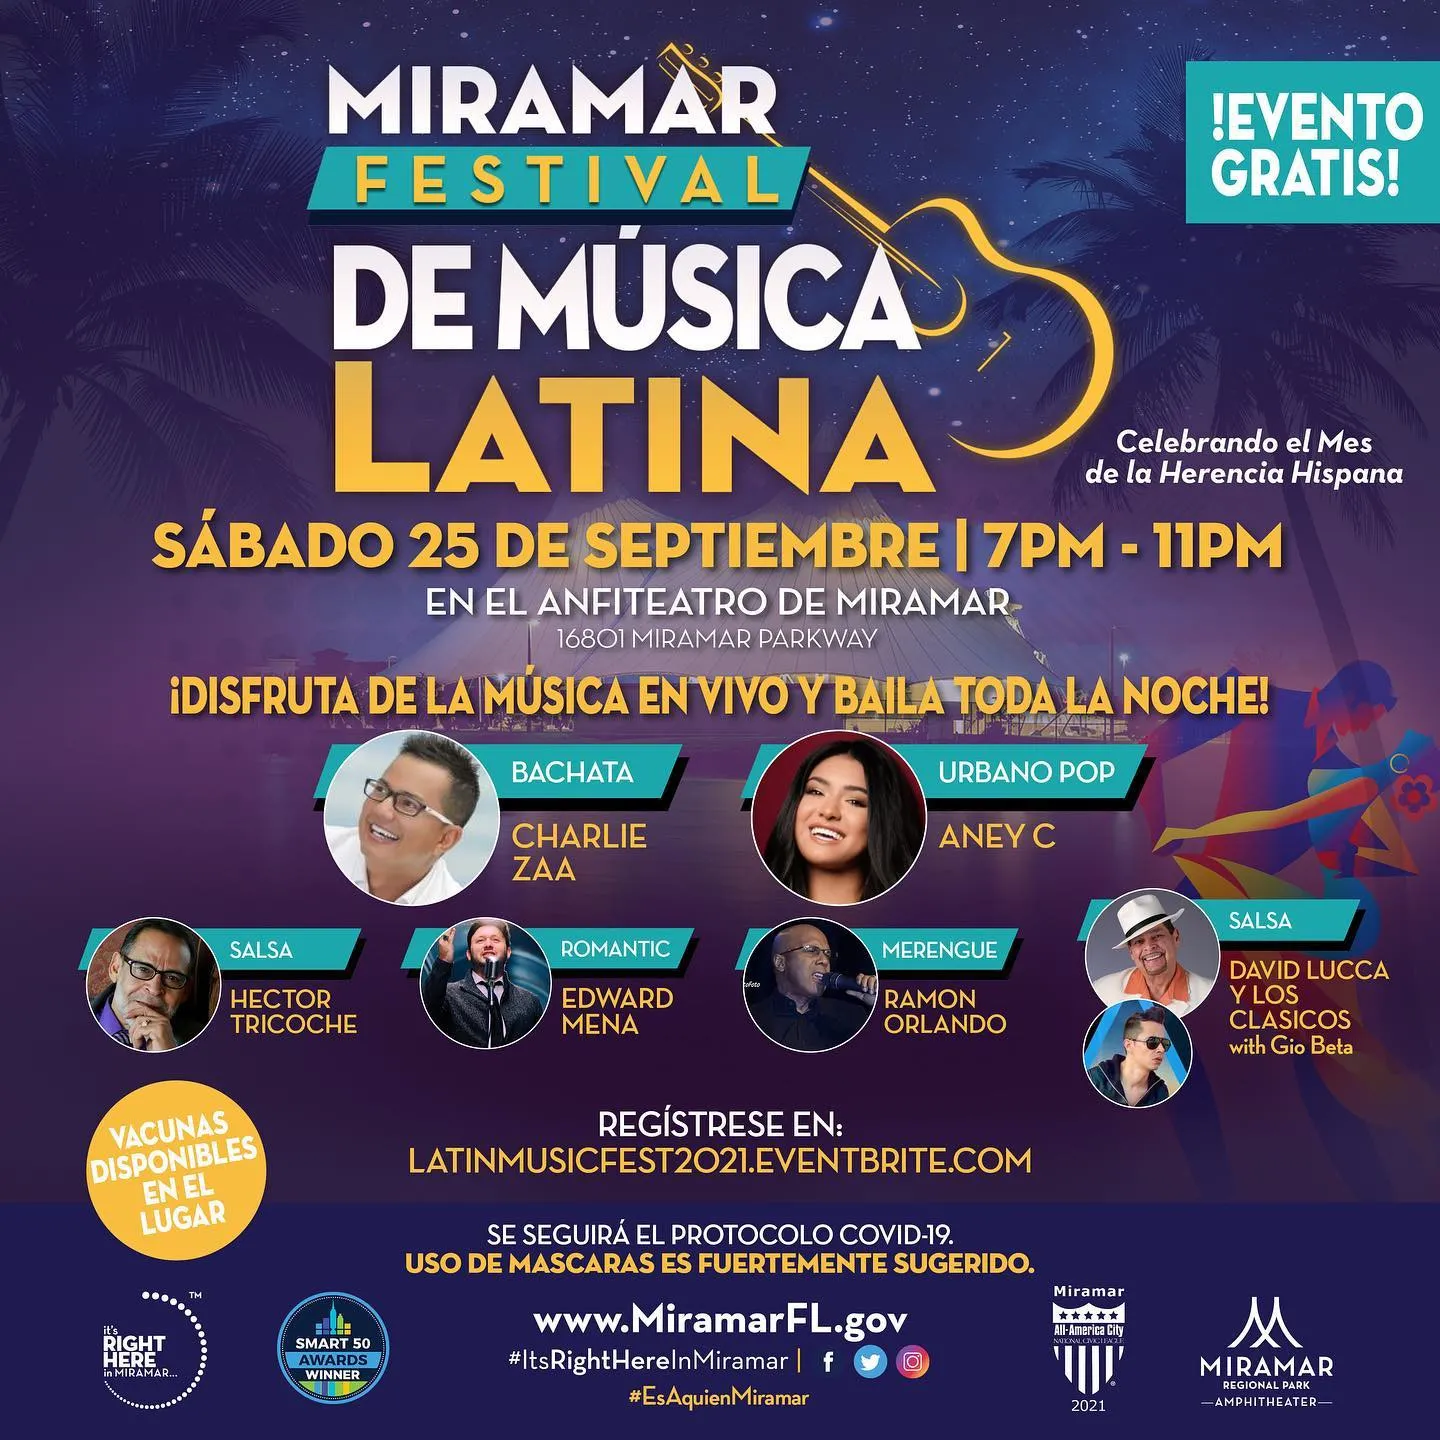 Miramar celebra Mes de la Herencia Hispana en EEUU con música latina